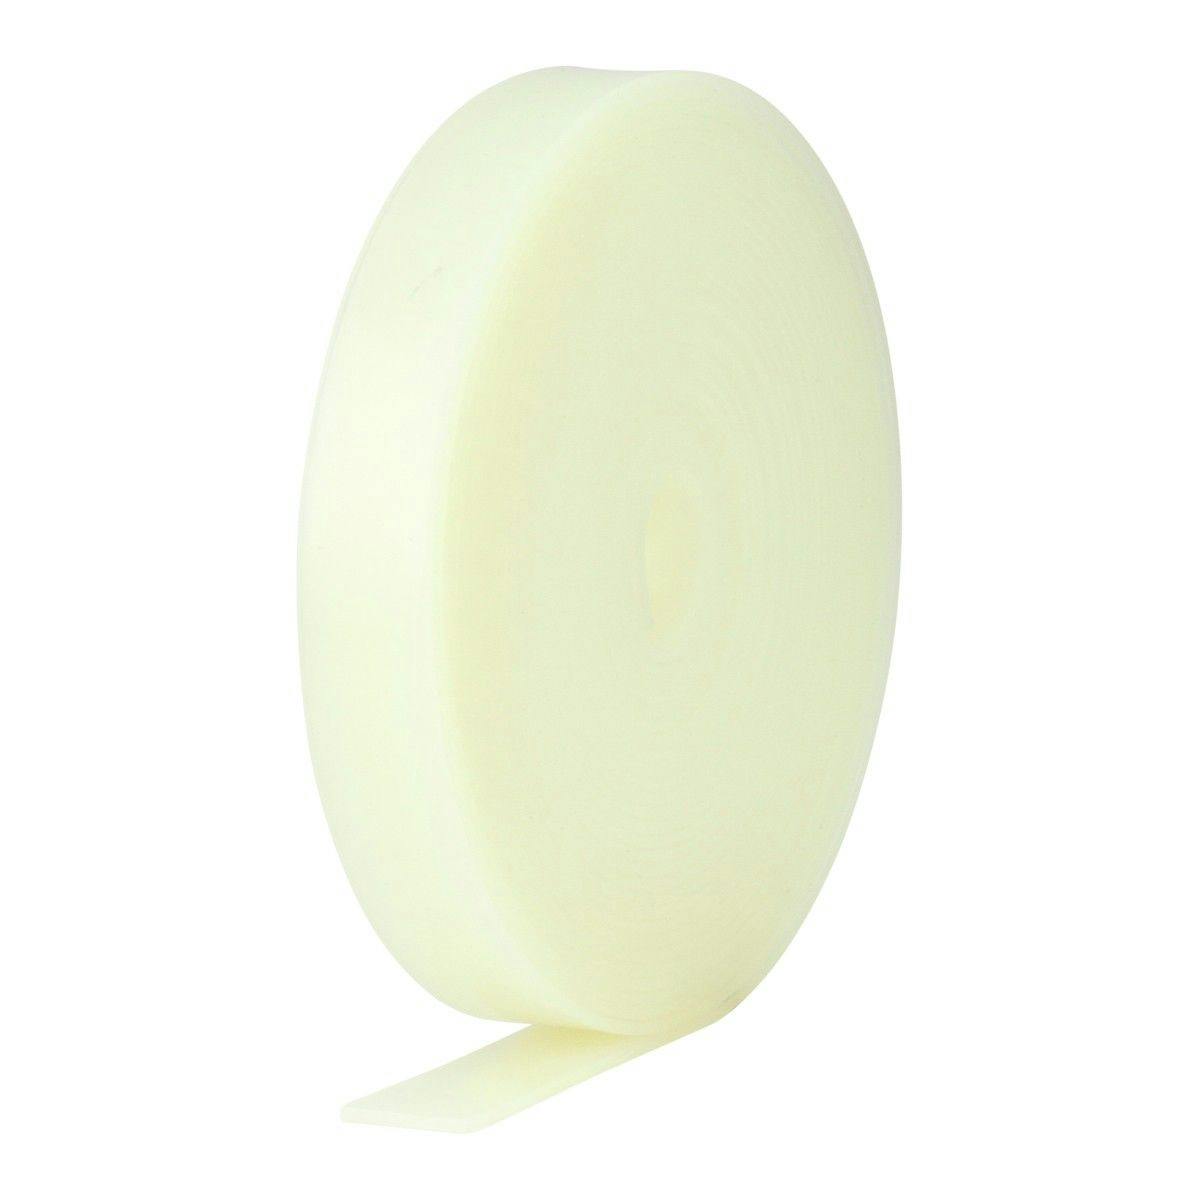 EKI 1559 silicone rubber transparent